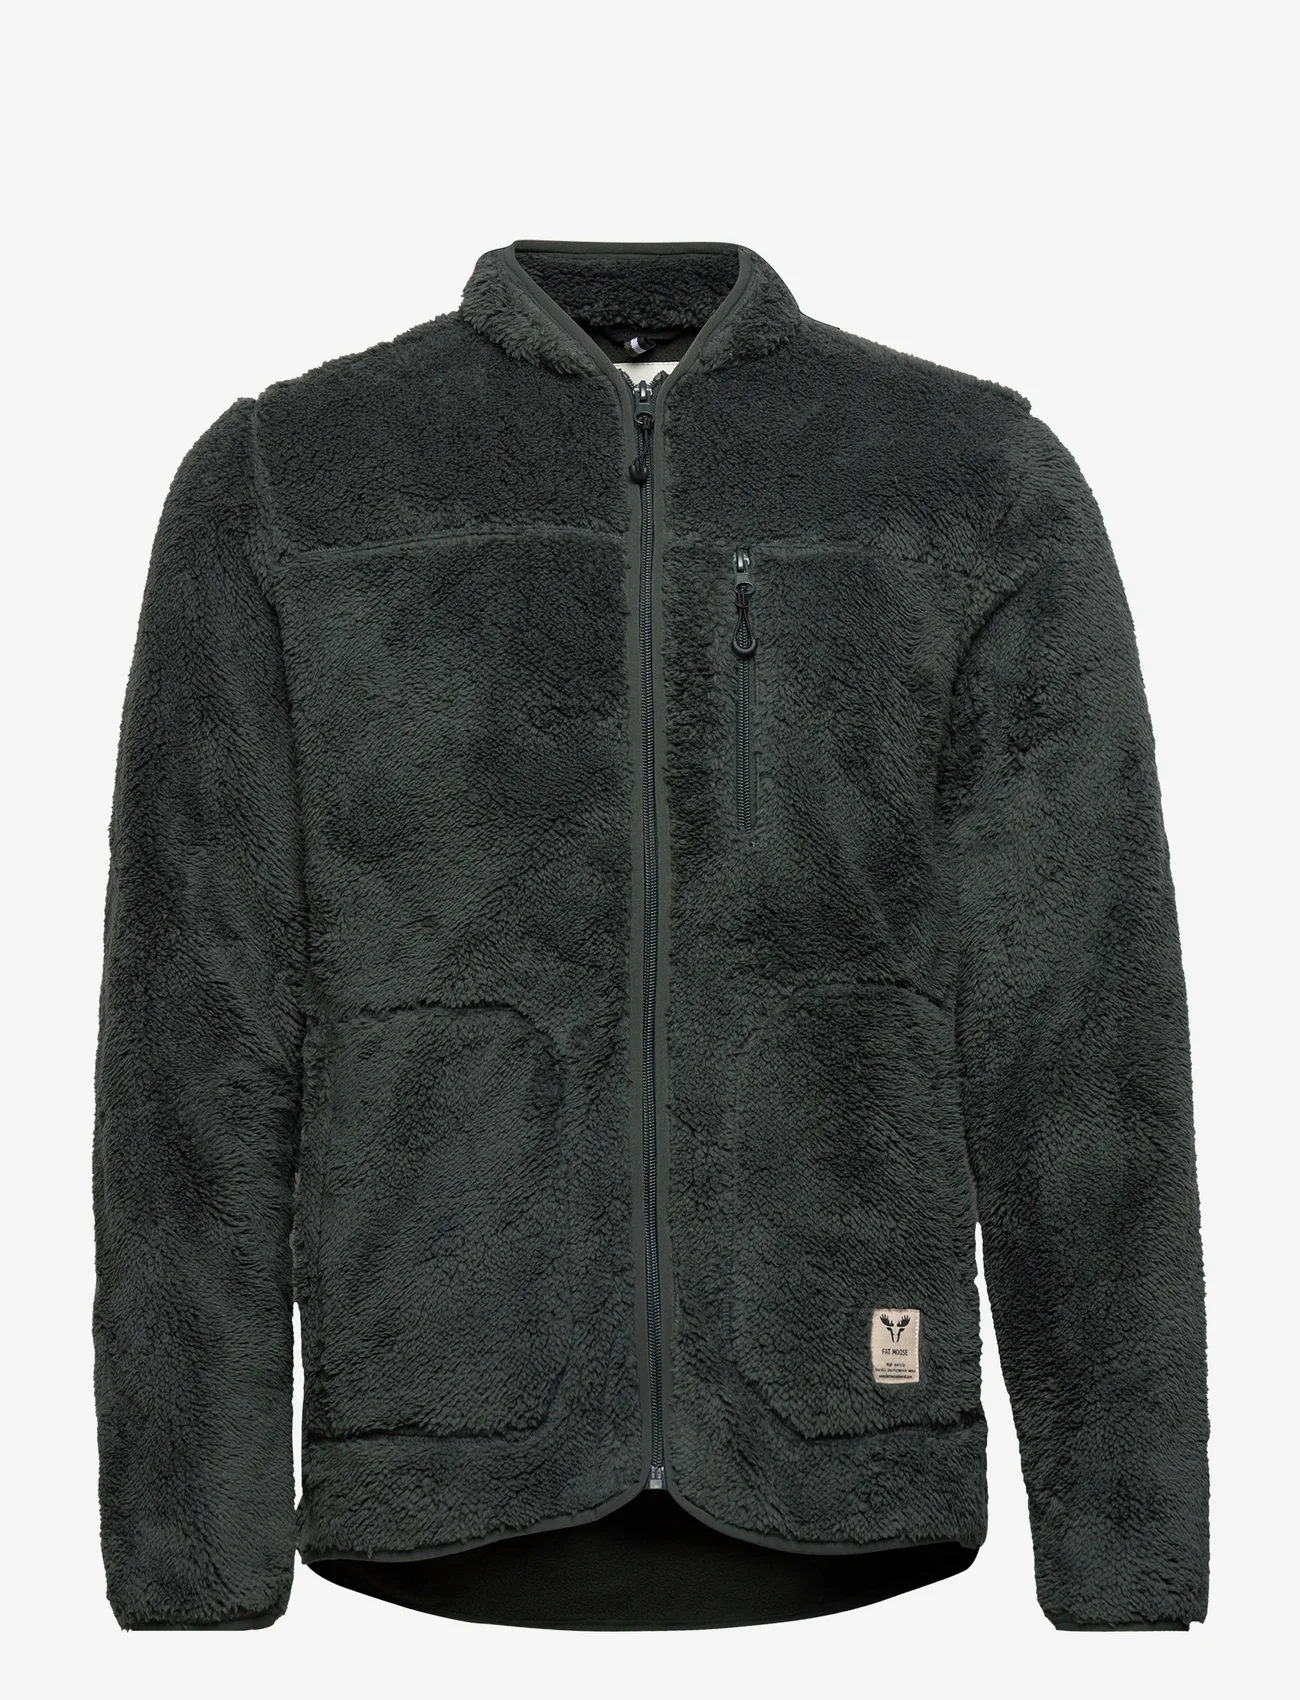 Fat Moose - Pine Fleece Jacket - mid layer jackets - beetle green - 0